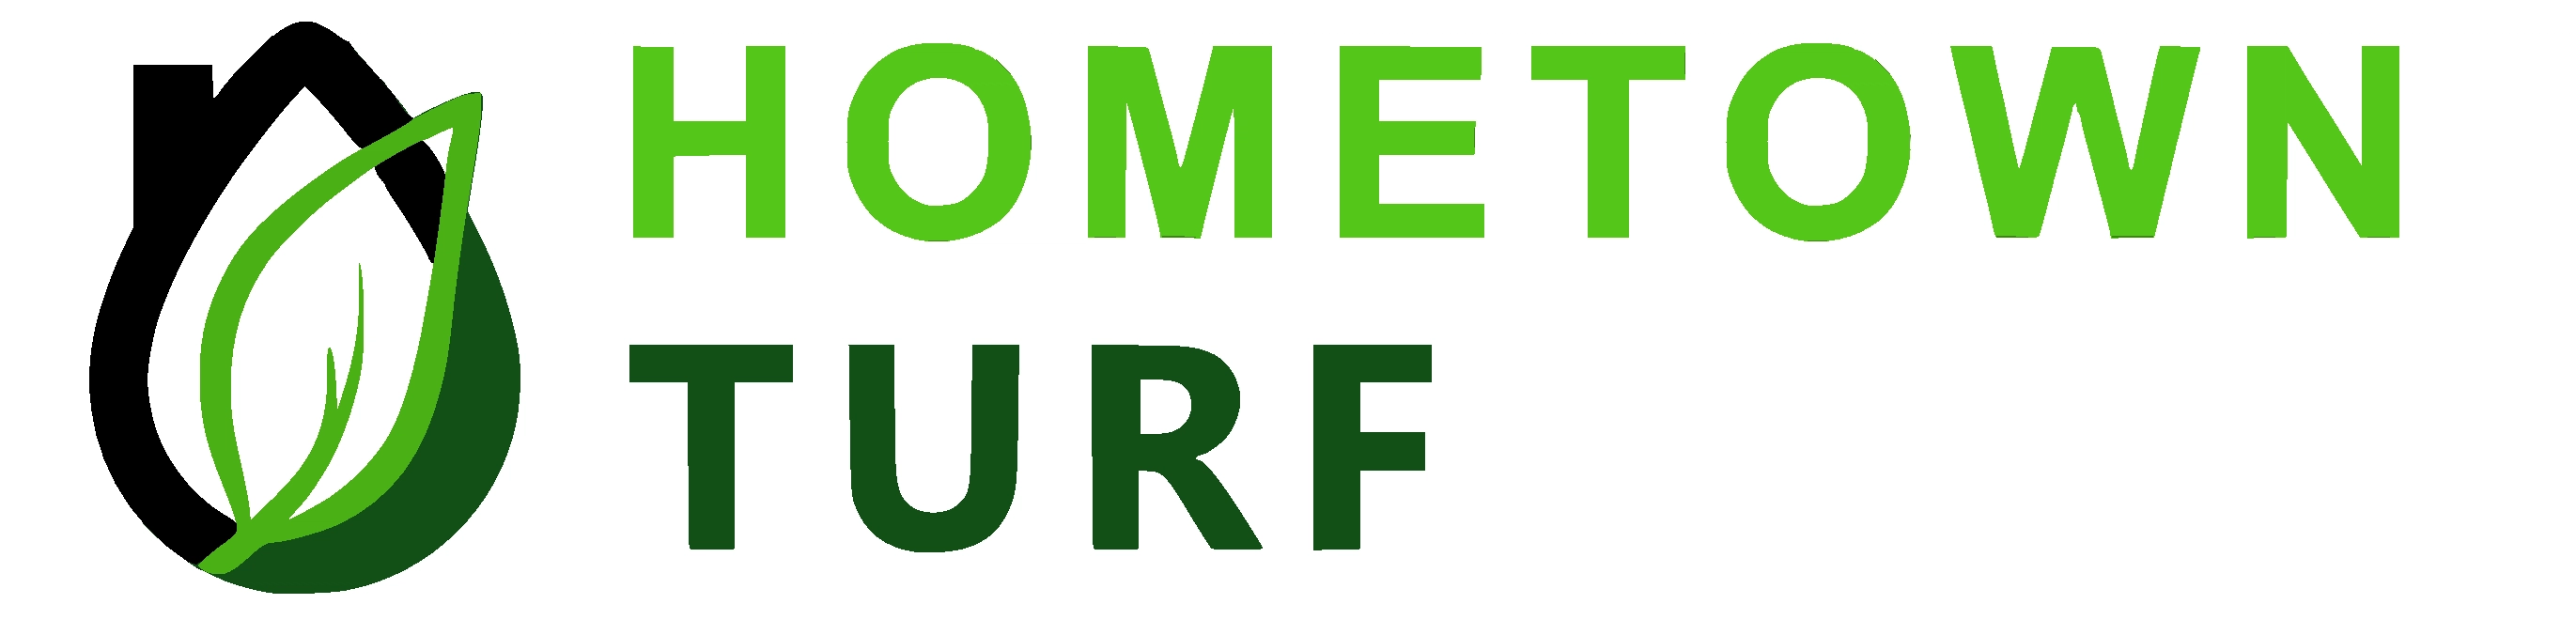 Hometown Turf Logo